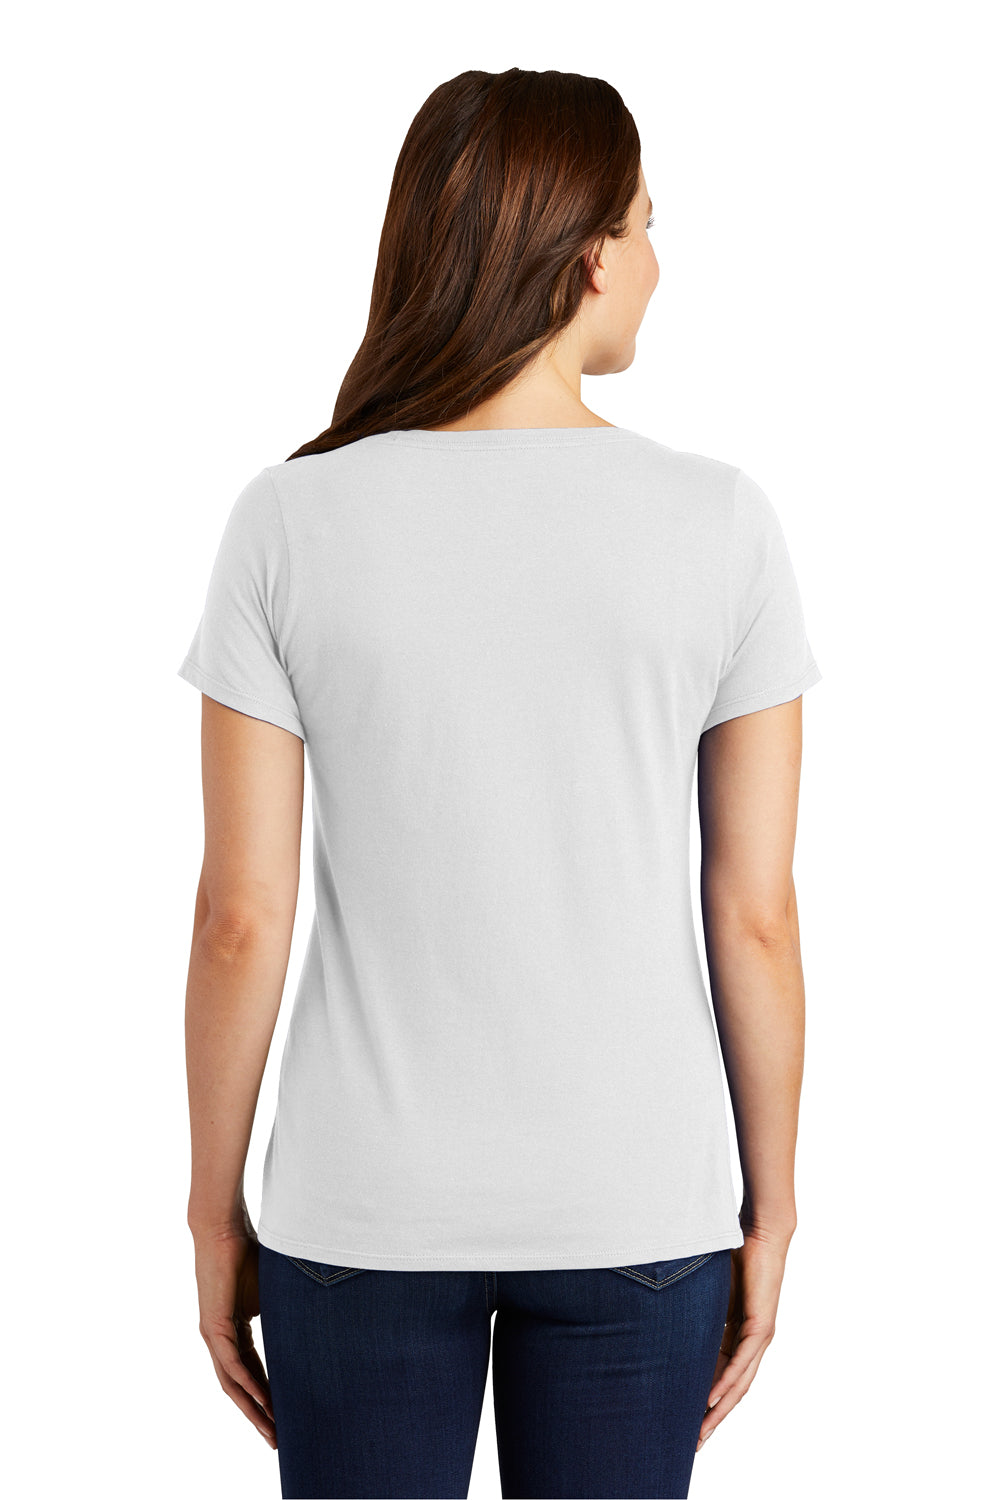 Nike NKBQ5234 Womens Dri-Fit Moisture Wicking Short Sleeve Scoop Neck T-Shirt White Model Back